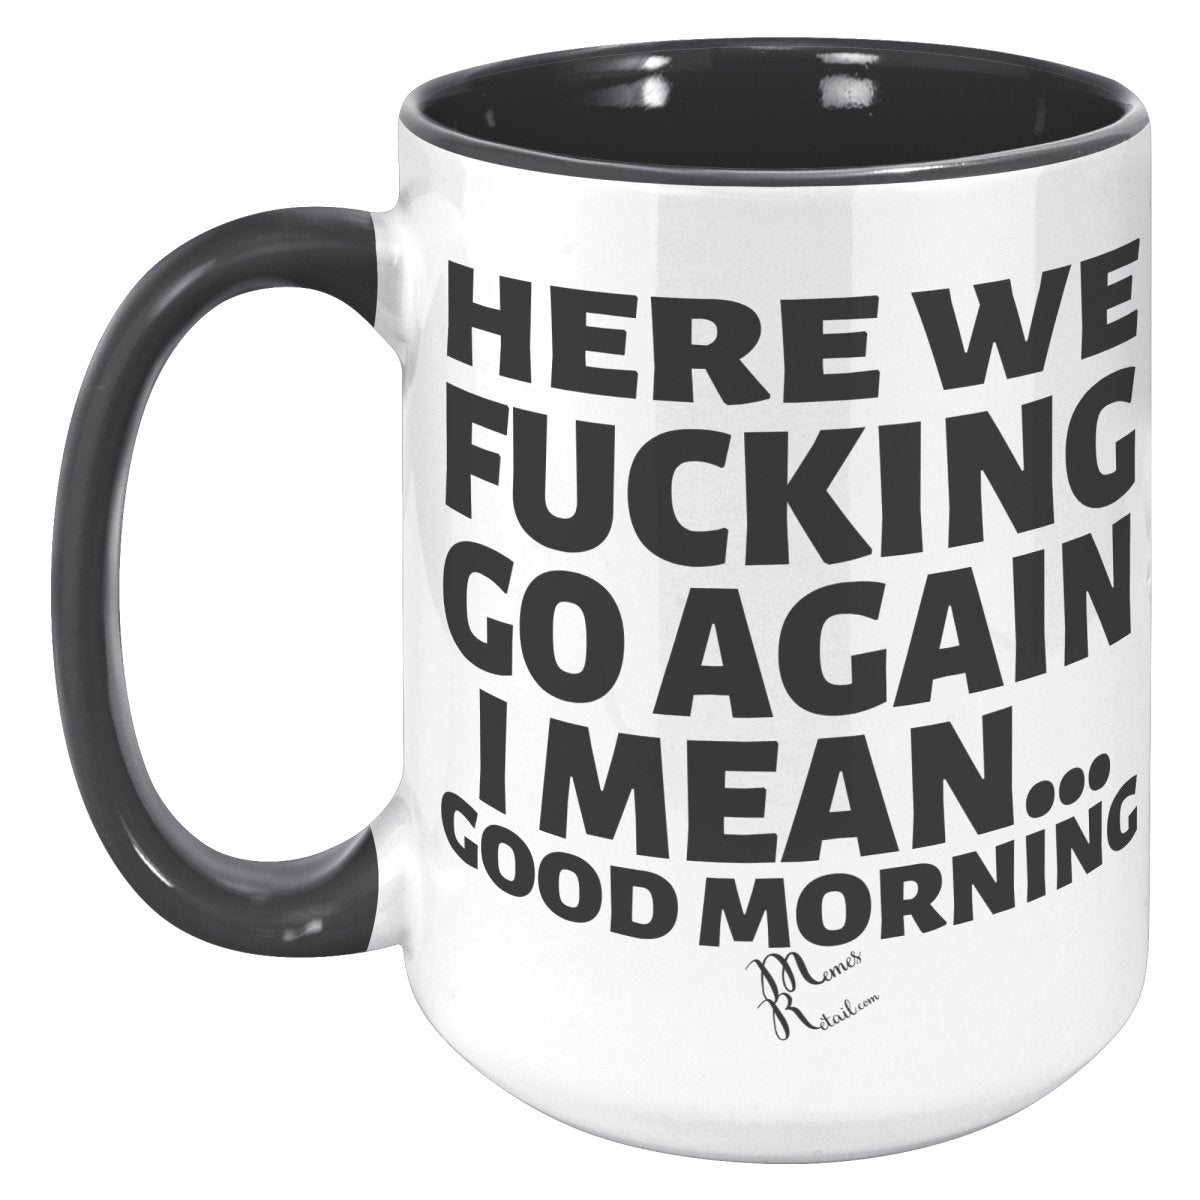 Here We Fucking Go Again, I mean...good morning - Big Lettering Mugs, 15oz / Black Accent - MemesRetail.com